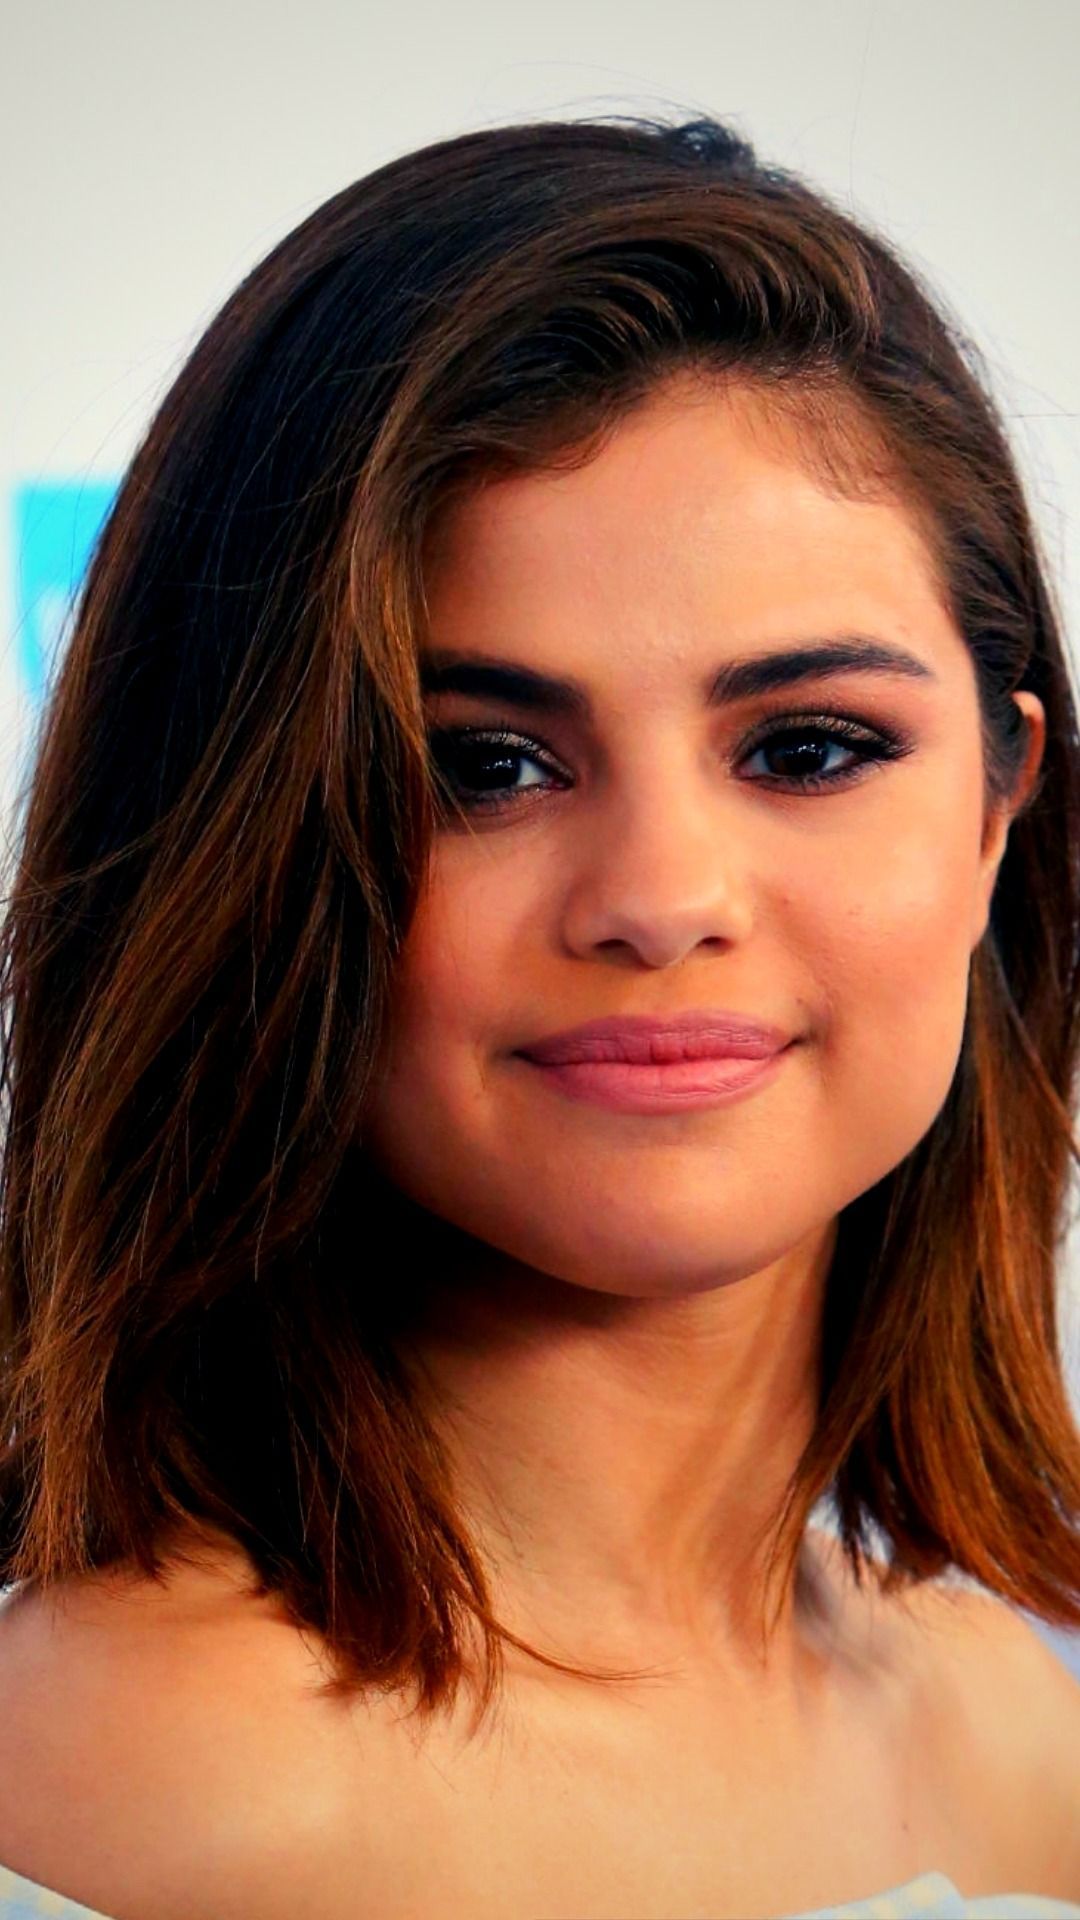 Best Selena Gomez iPhone background HD Wallpaper free Download. Selena gomez, Selena, iPhone wallpaper